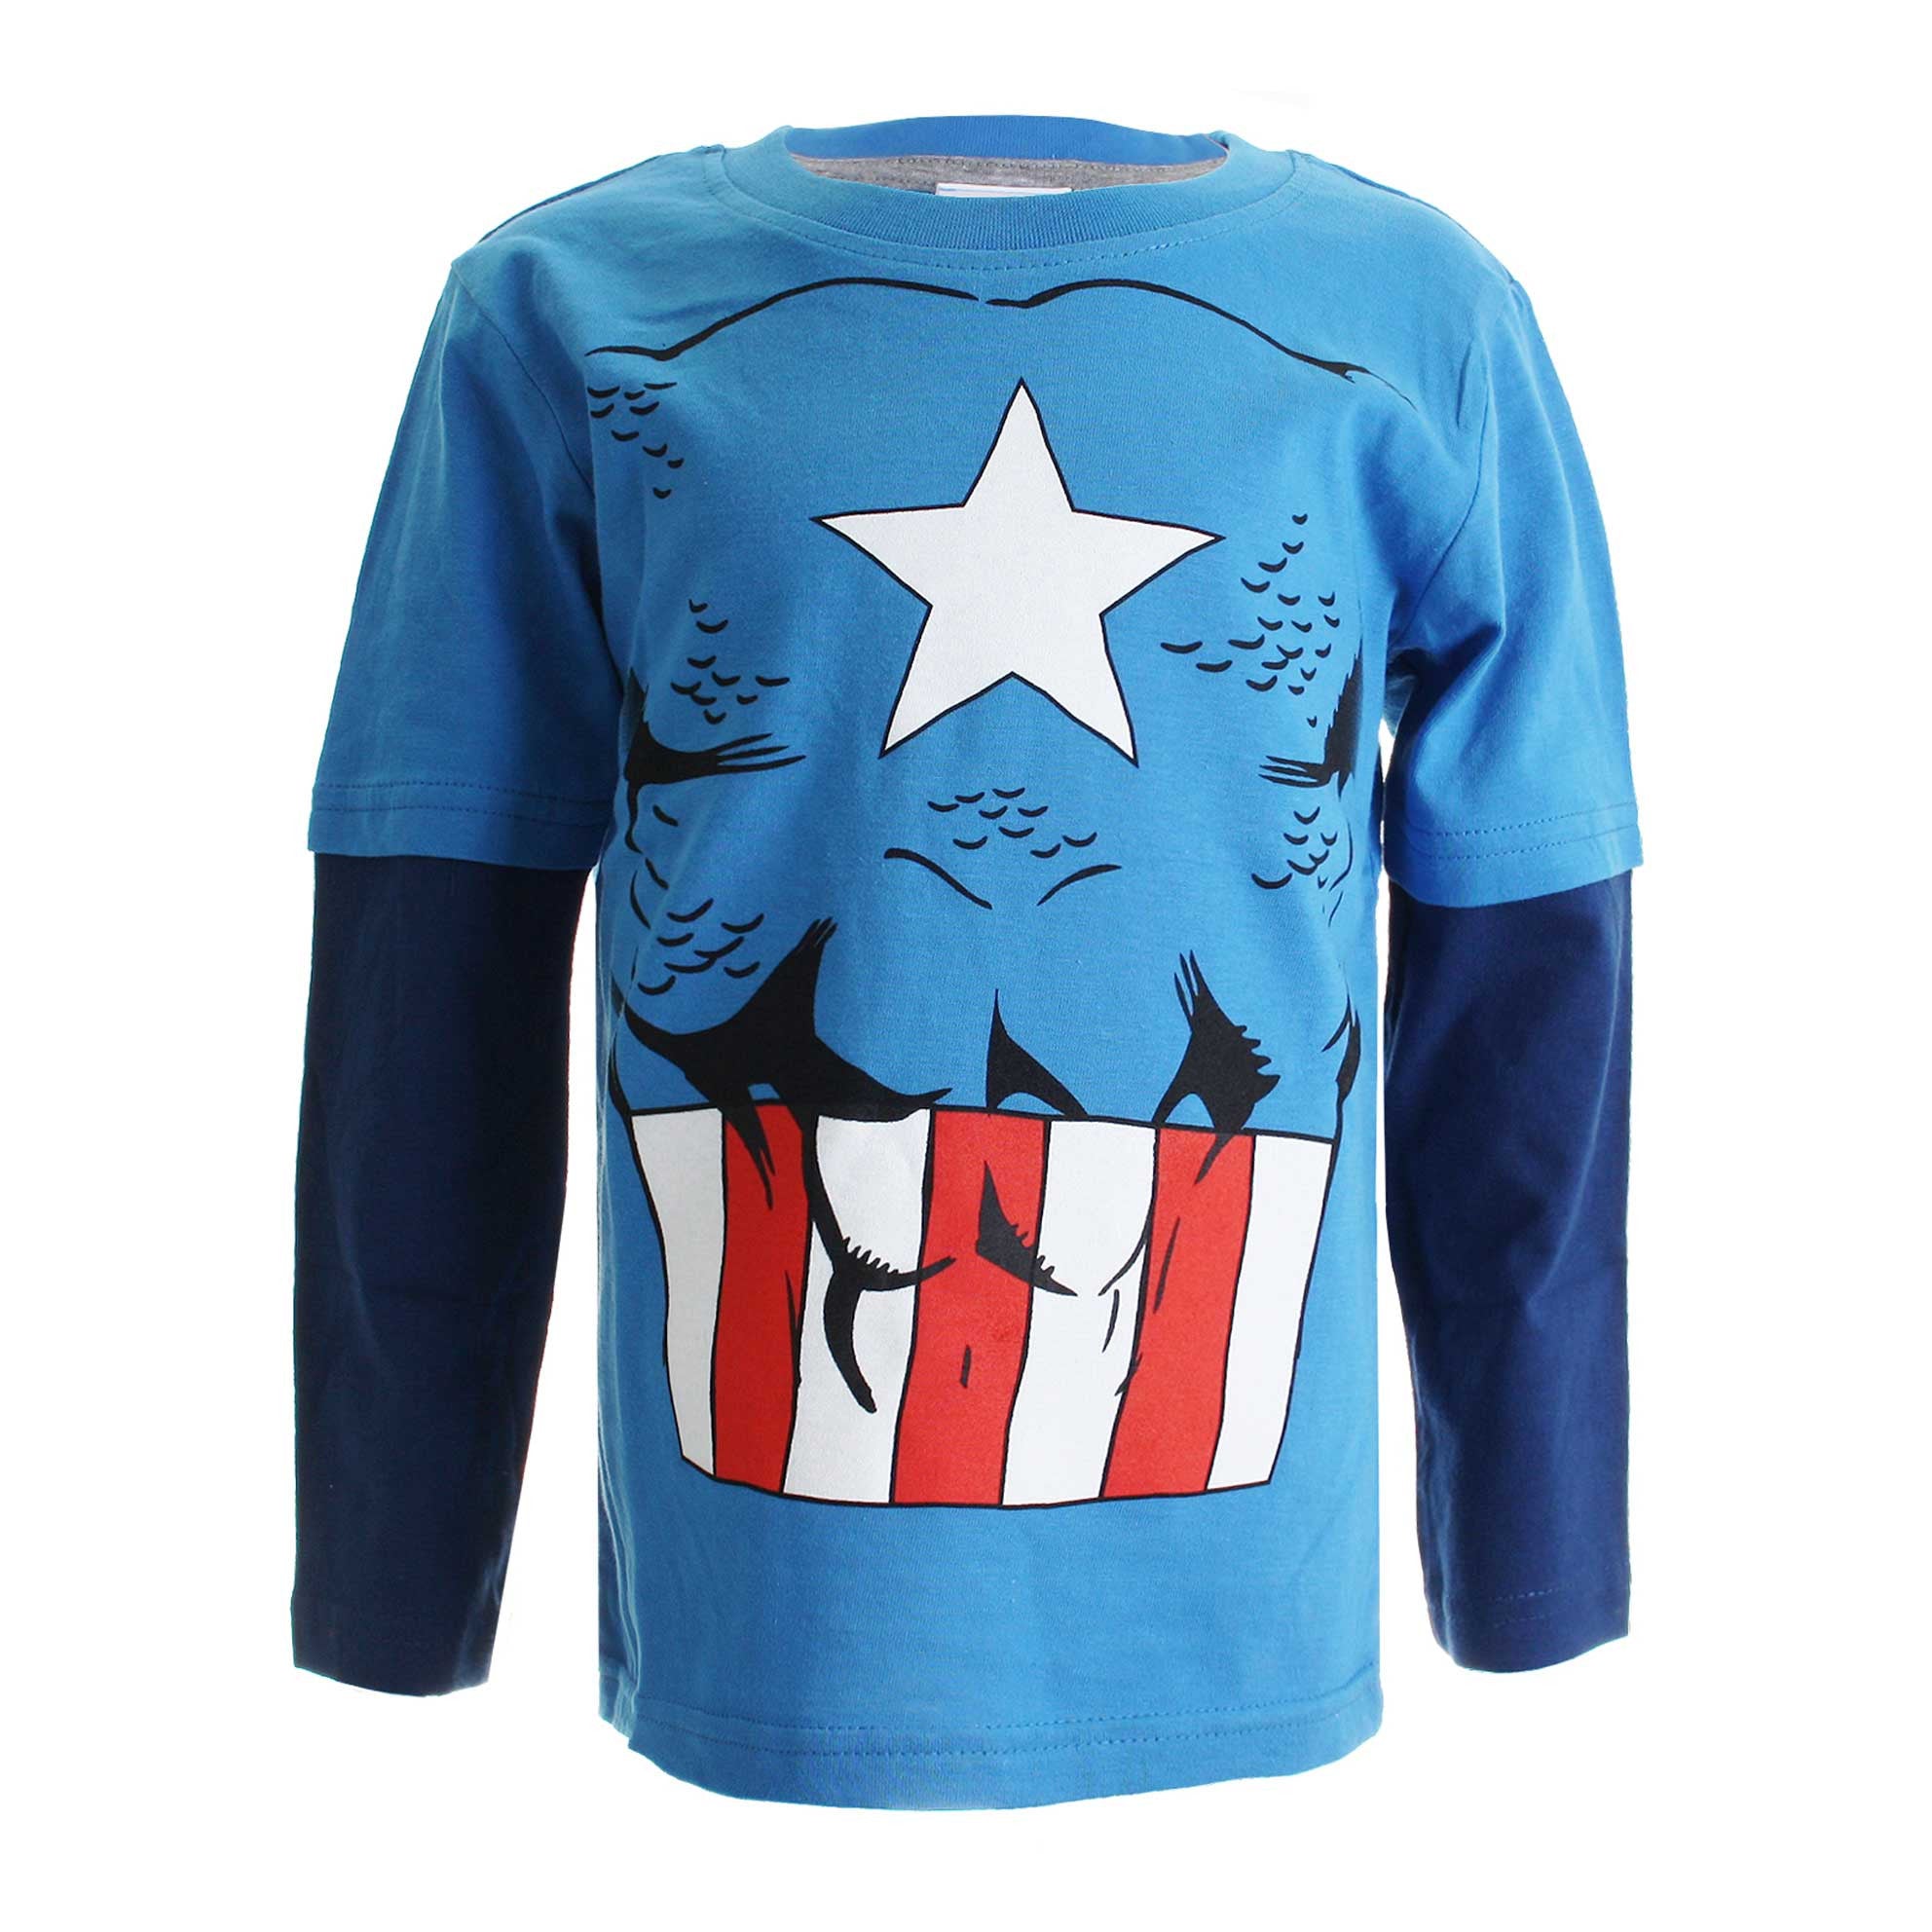 captain america costume t shirt